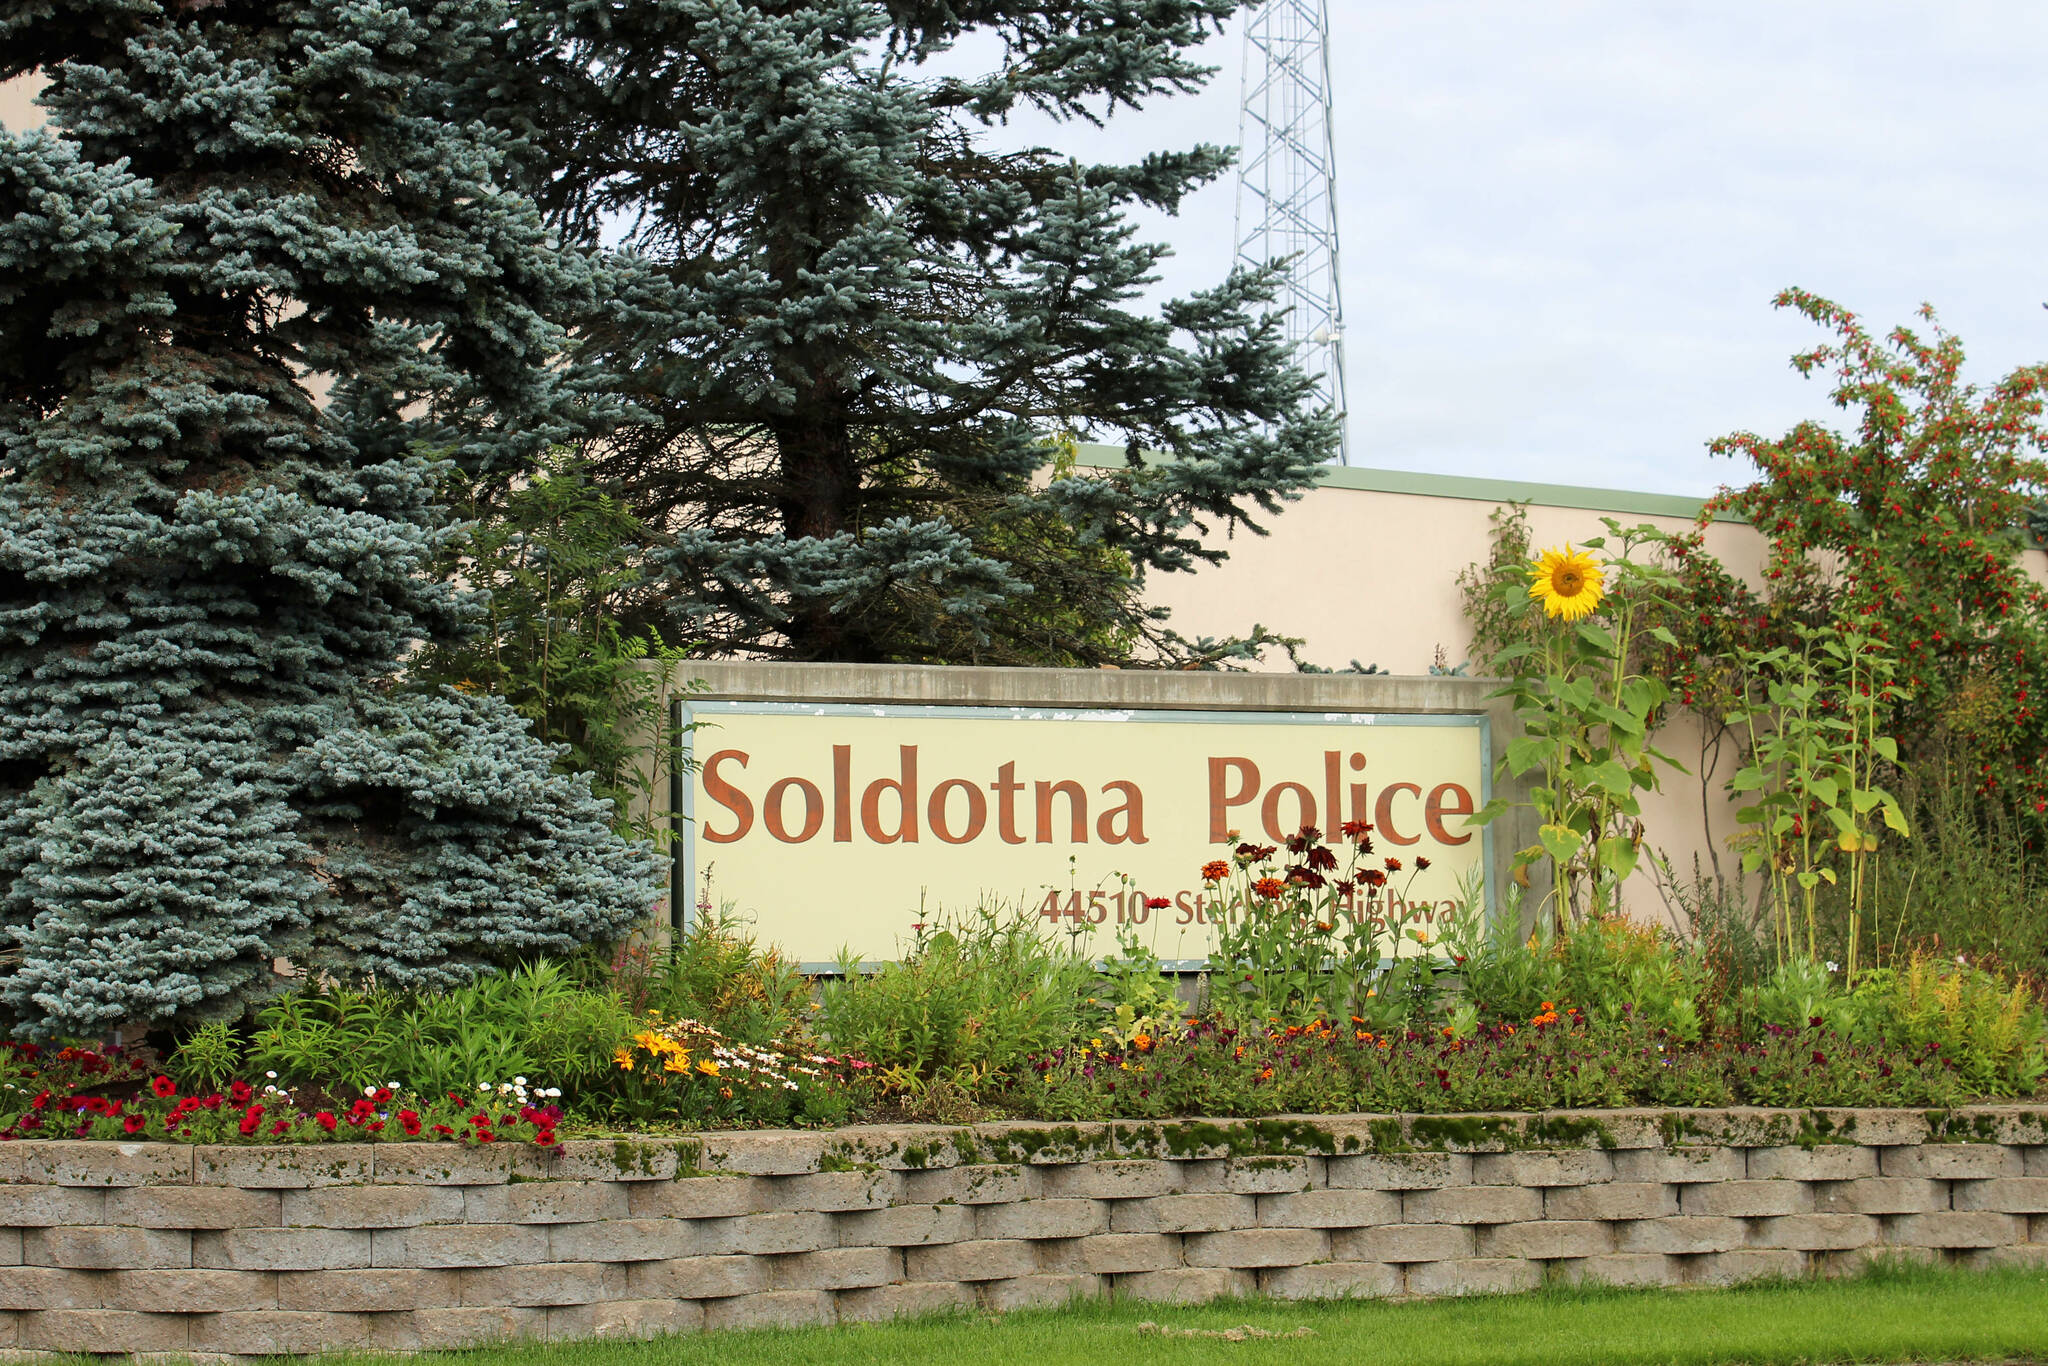 Foliage surrounds the Soldotna Police Department sign on Tuesday, Aug. 30, 2022 in Soldotna, Alaska. (Ashlyn O’Hara/Peninsula Clarion)